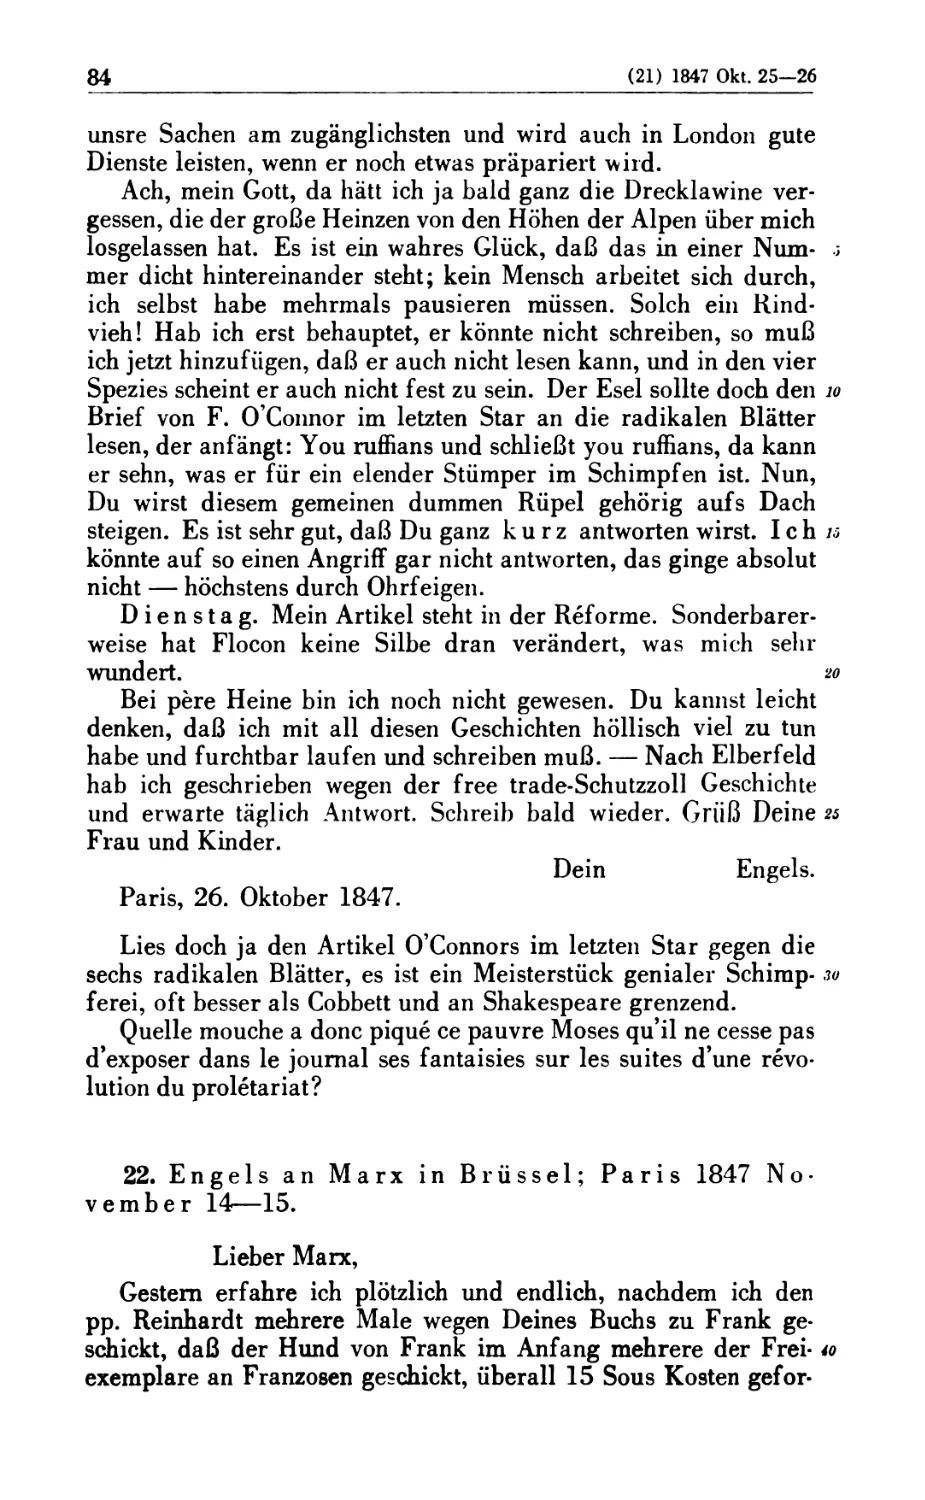 22. Engels an Marx in Brüssel; Paris 1847 November 14—15